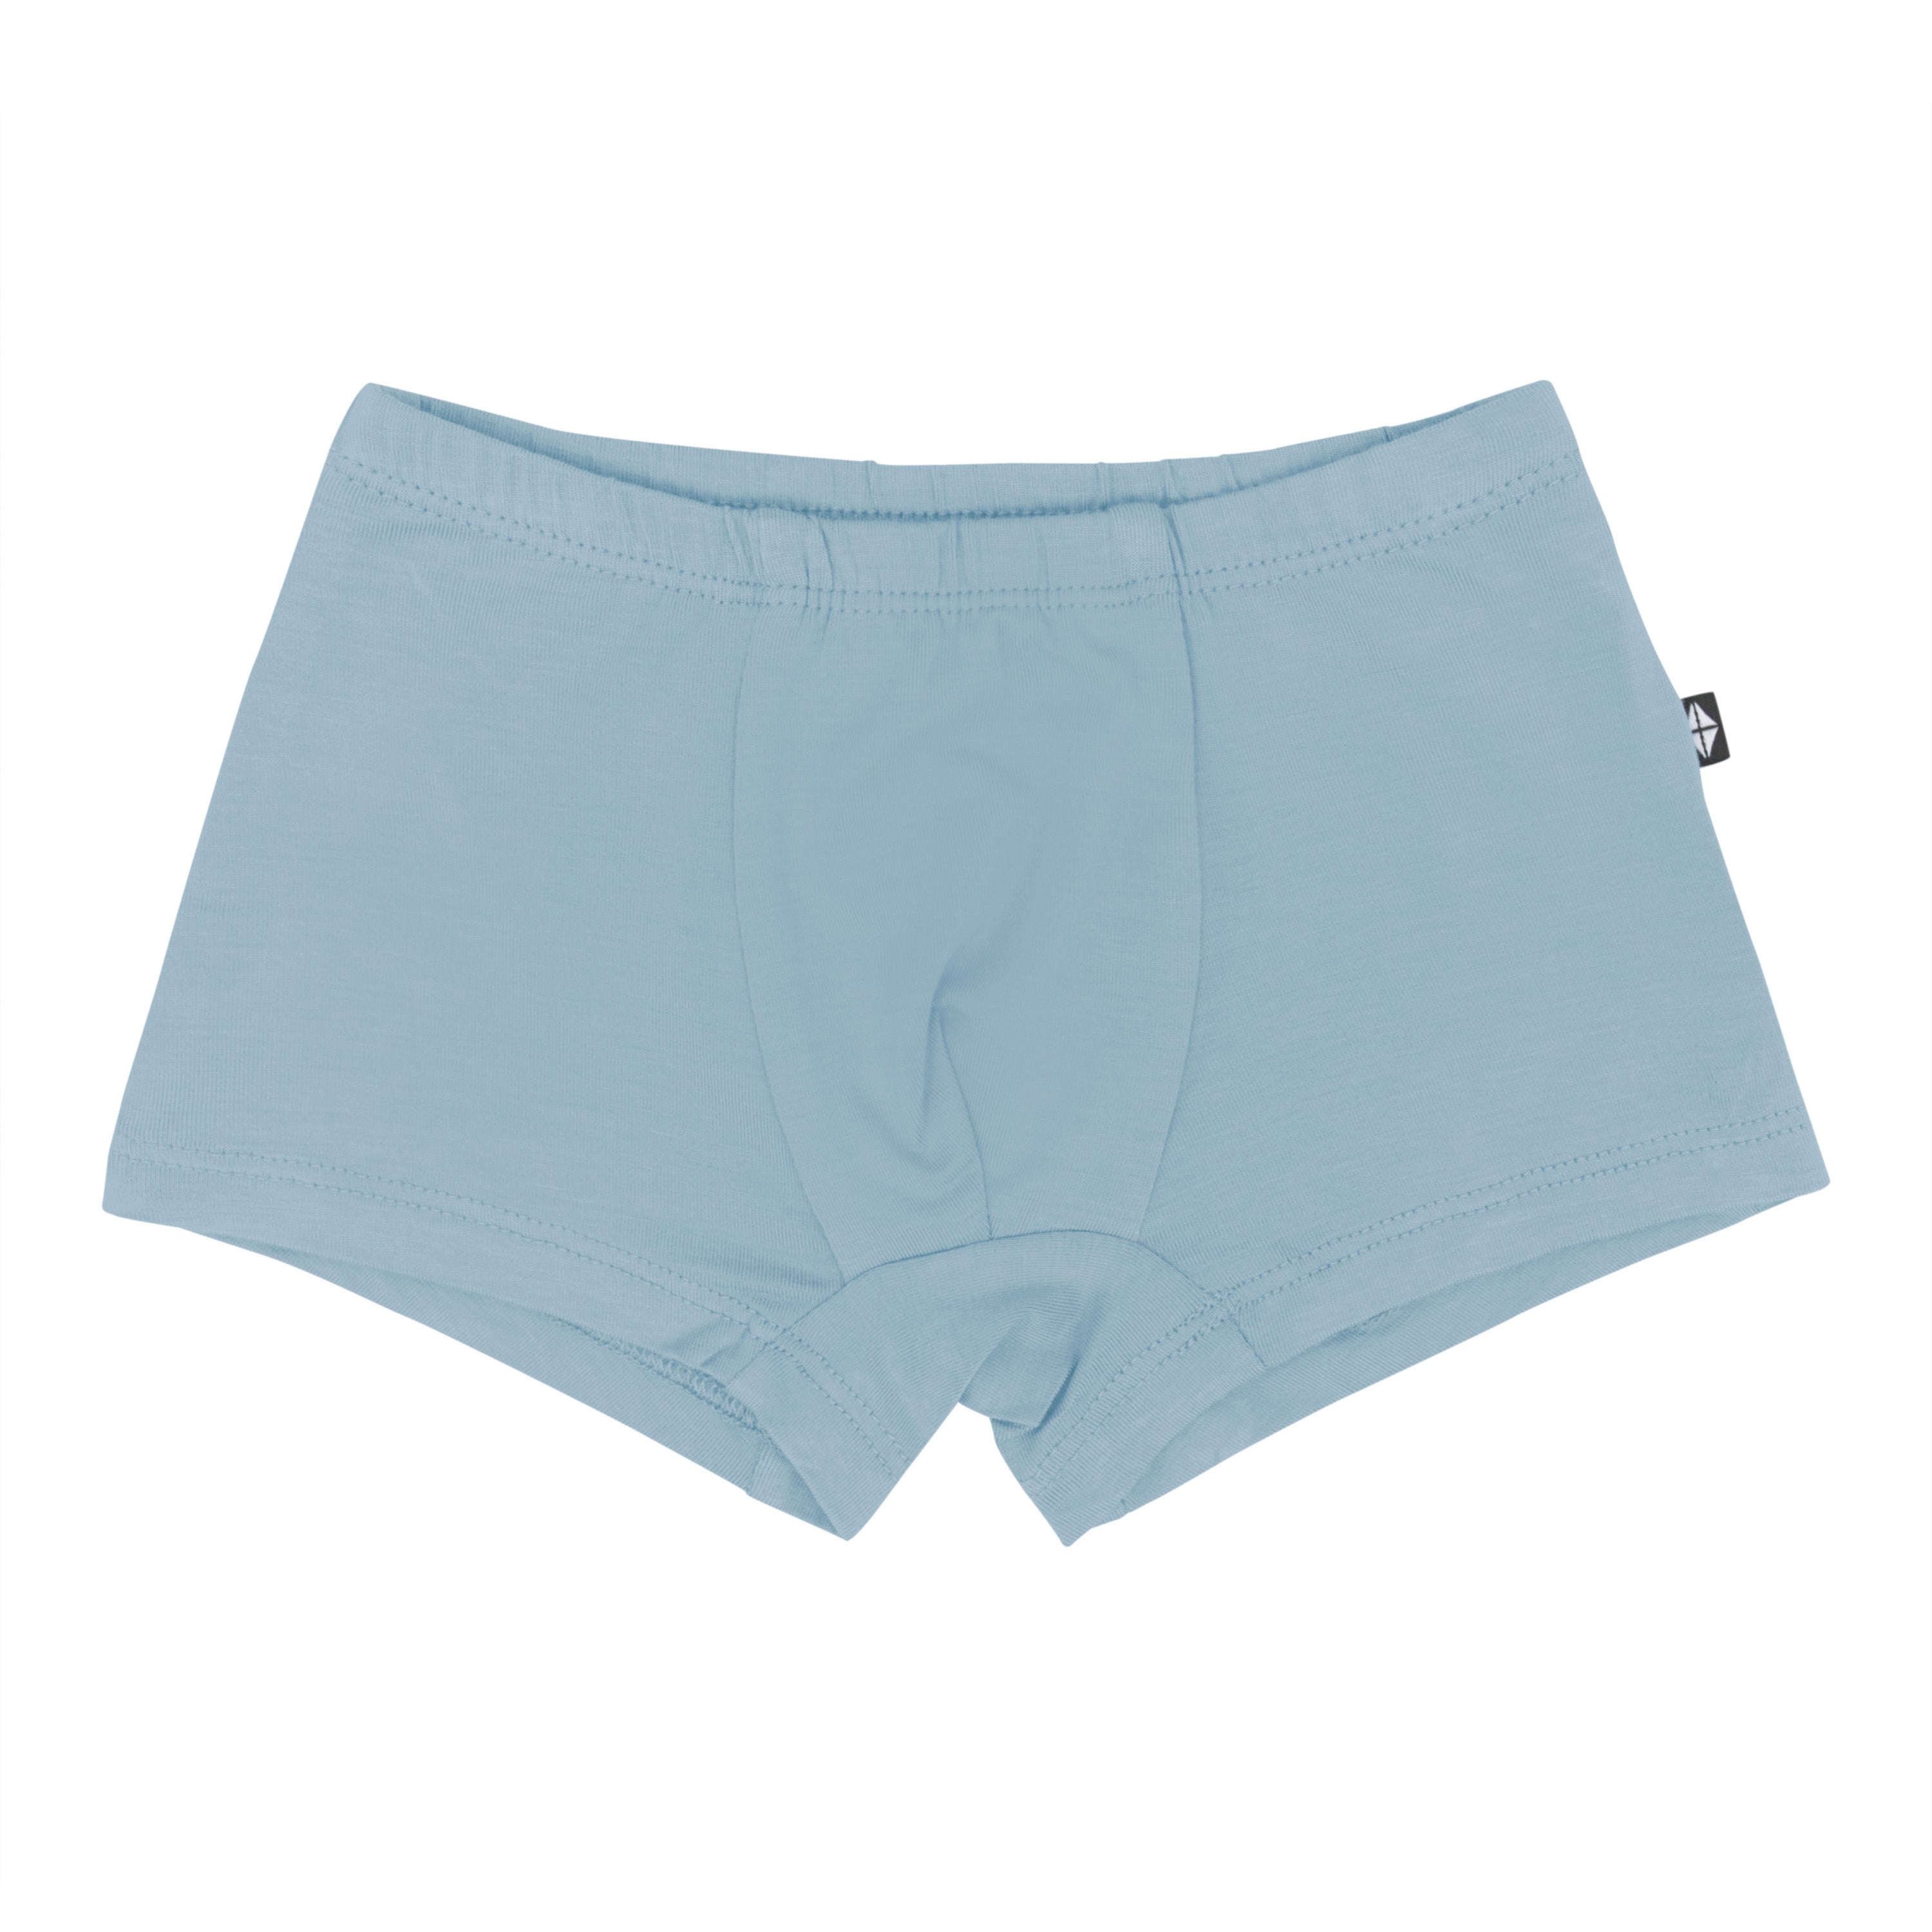 Kyte Baby Underwear Briefs in Dusty Blue